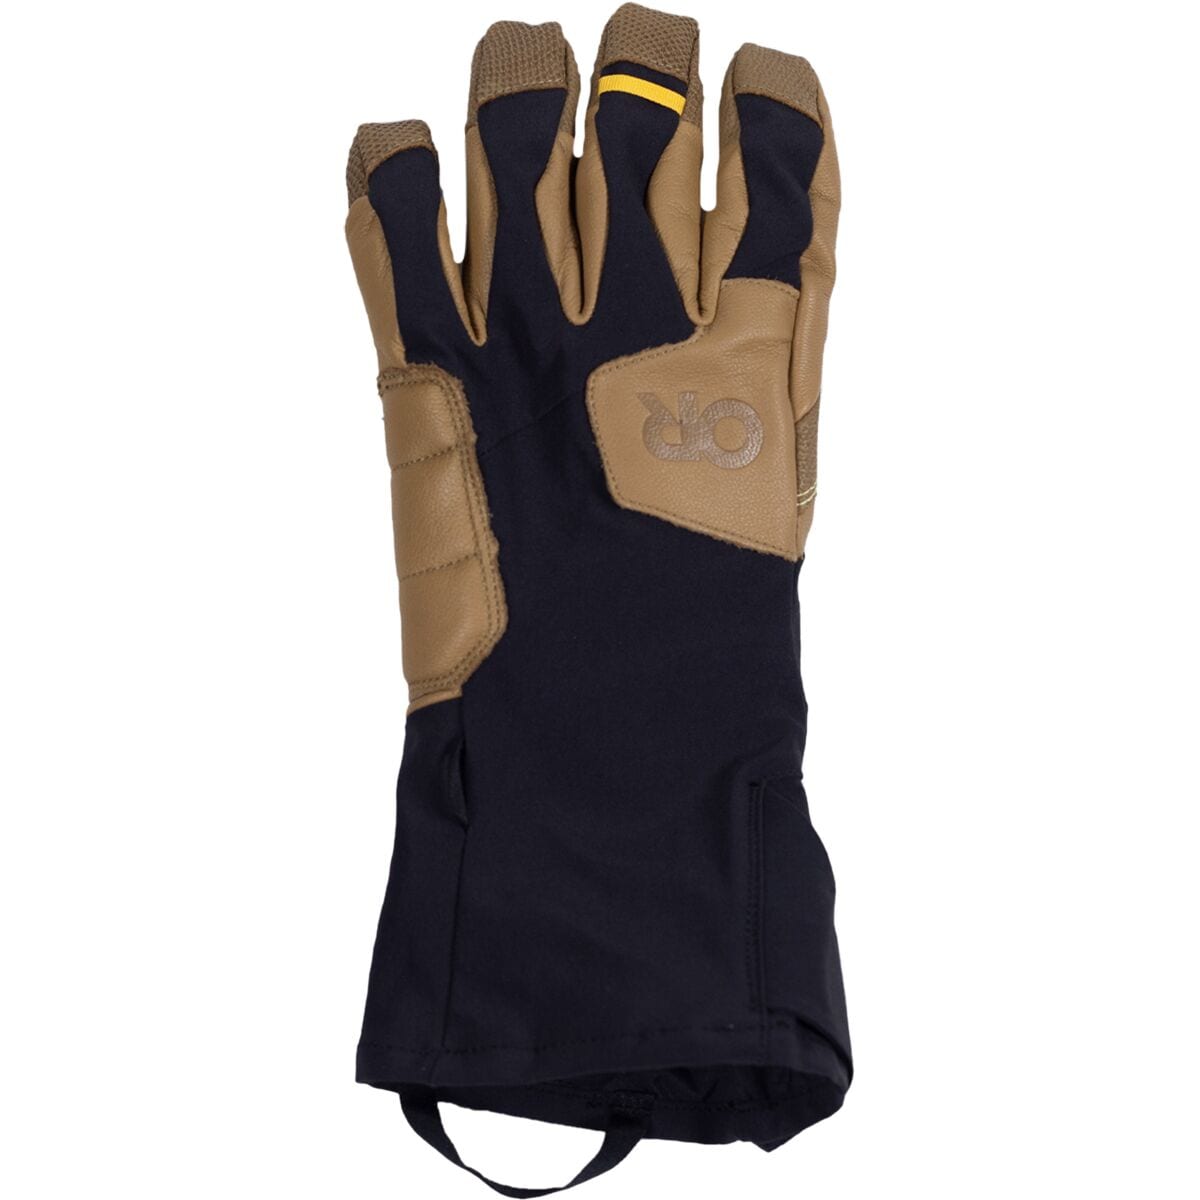 Outdoor Research ExtraVert Glove - Men's Black/Dark Natural